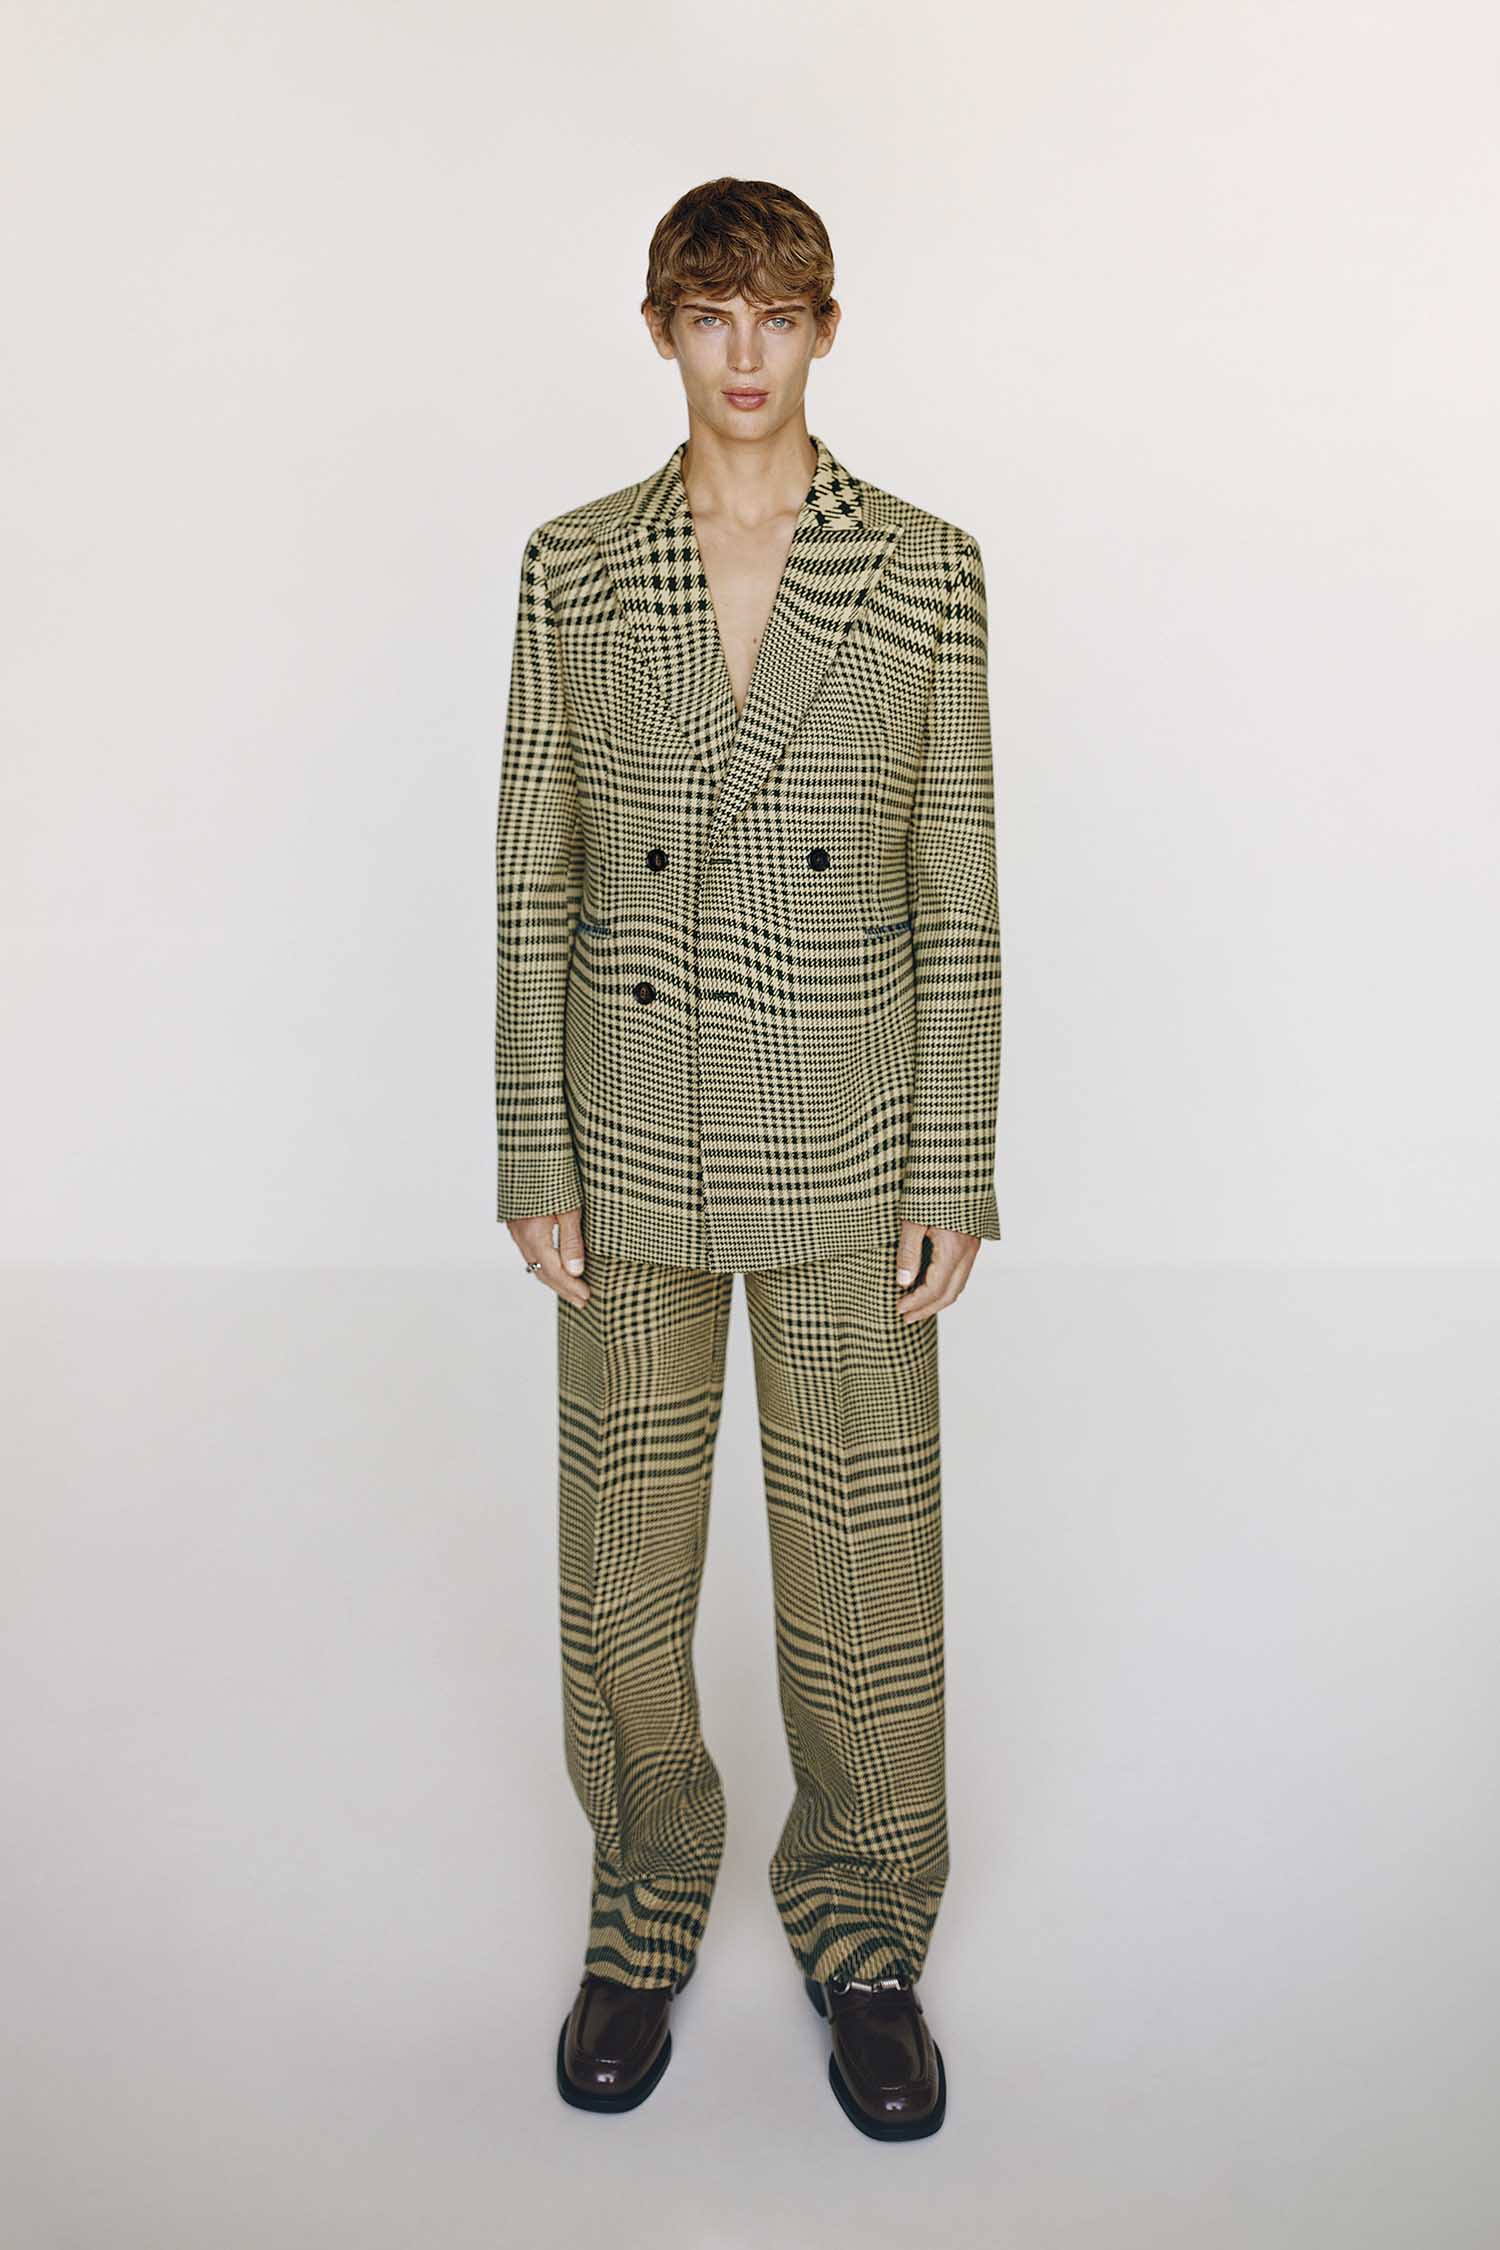 Louis Vuitton Supreme Brown Logo Fashion Luxury Brand Premium Blanket  Fleece Home Decor, by son nguyen